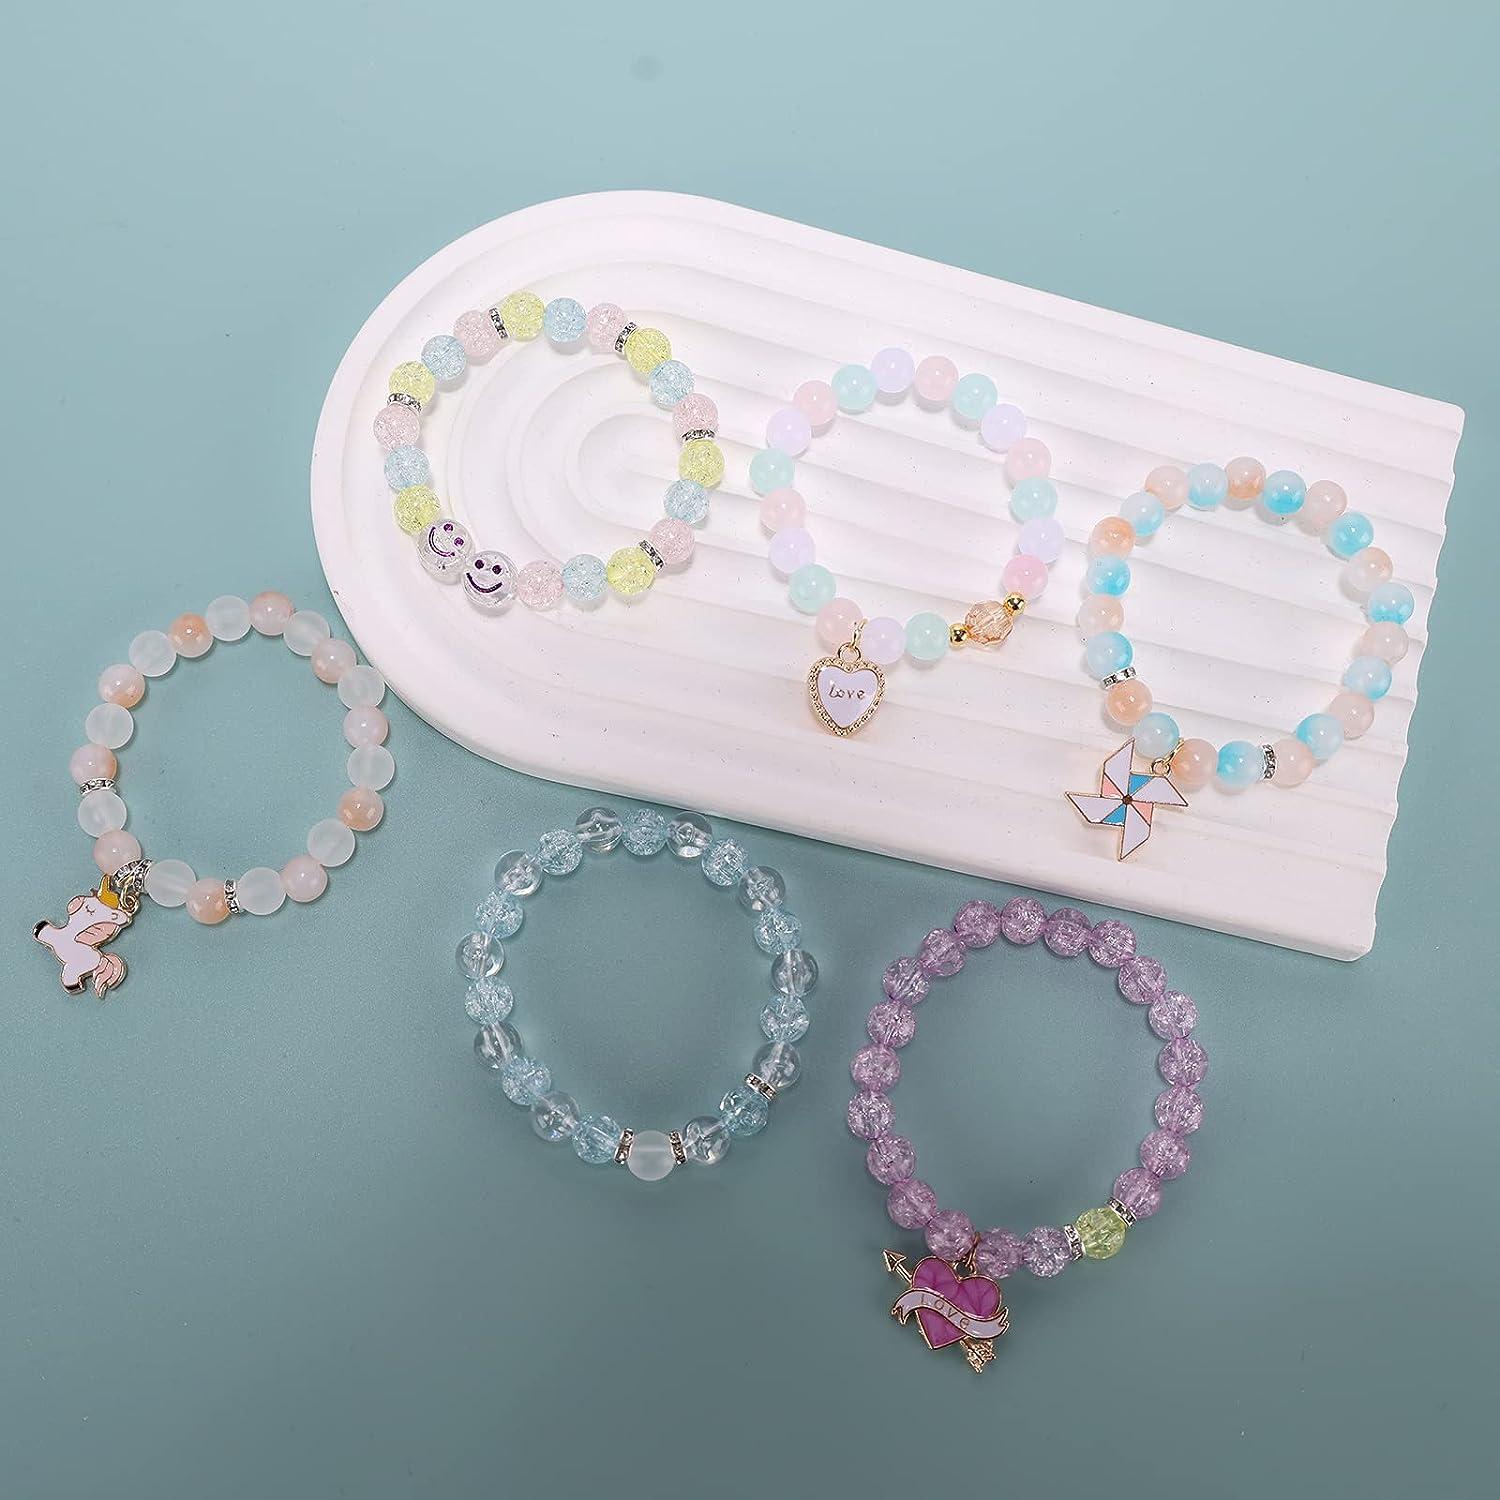 Bracelet Making Kit, Girl Cute Bracelet Necklace Jewelry Making Kit